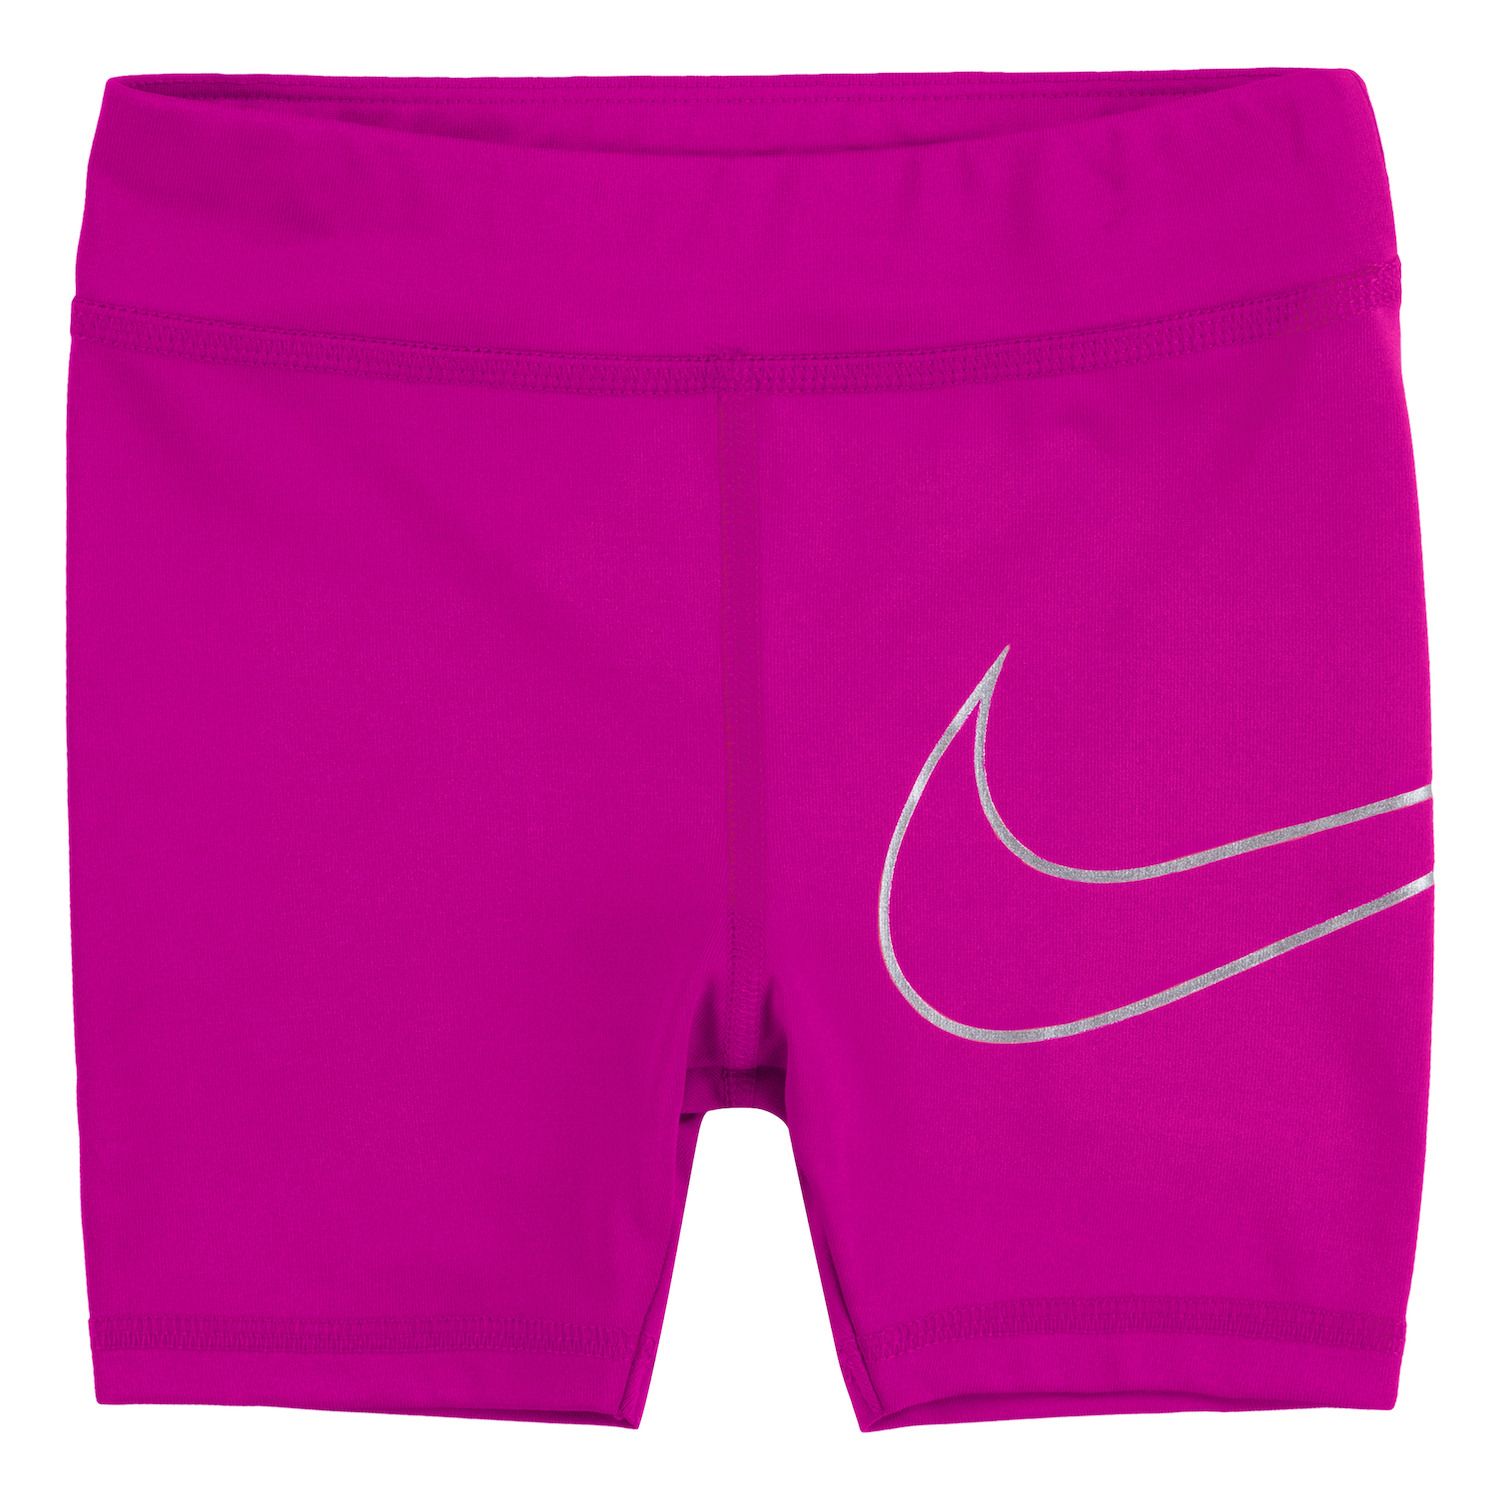 nike pink biker shorts